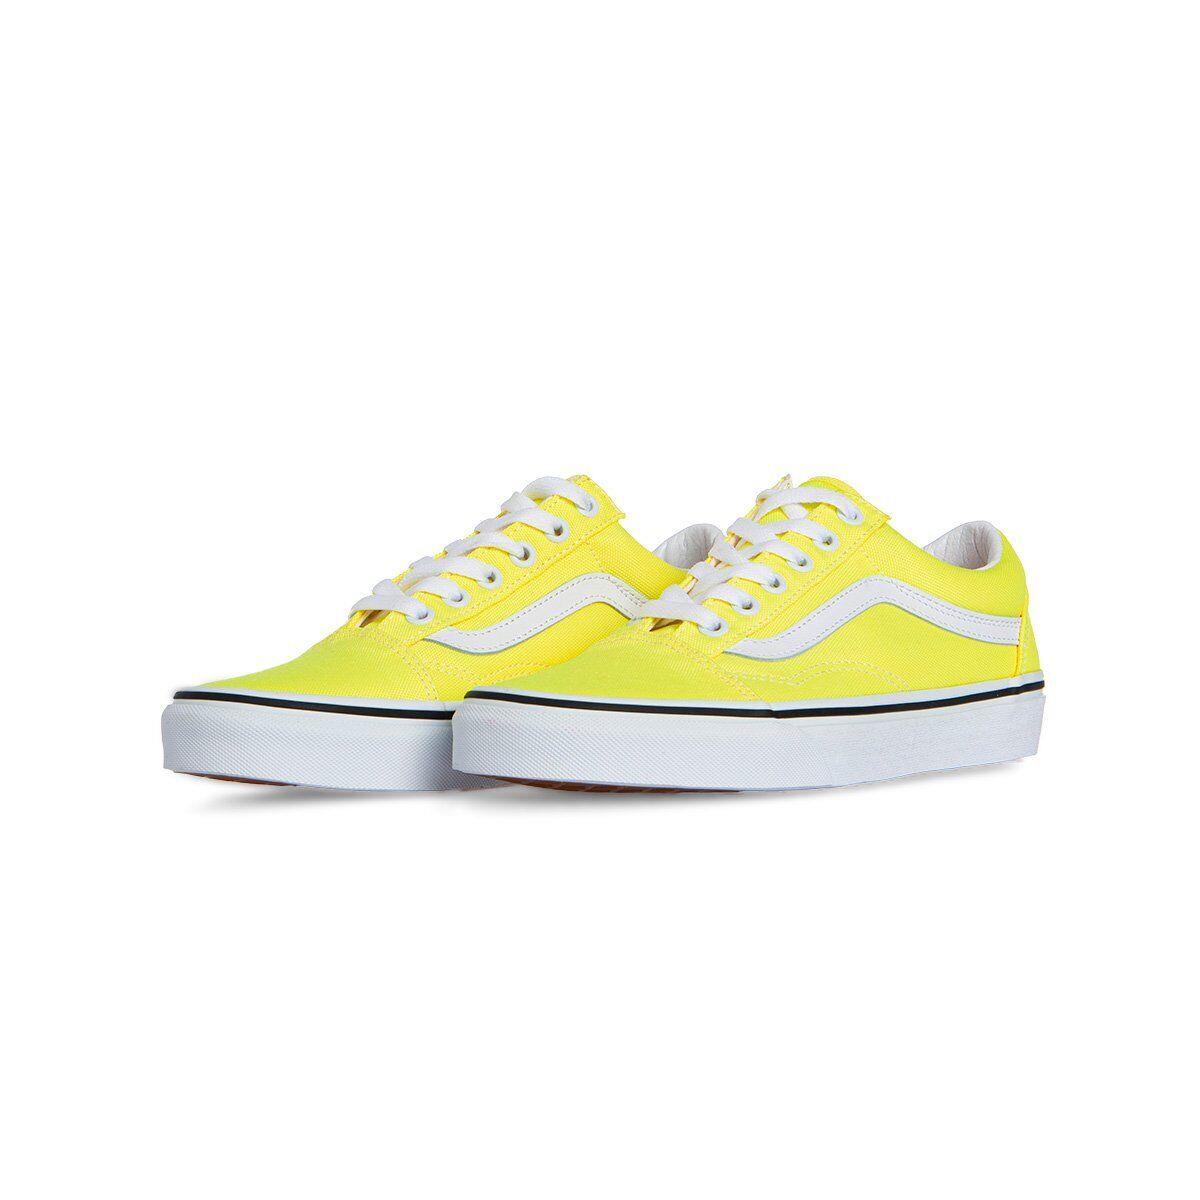 Vans Old Skool VN0A4U3BWT71 Unisex Adult Yellow Sneaker Shoes Size M9/W10.5 ST60